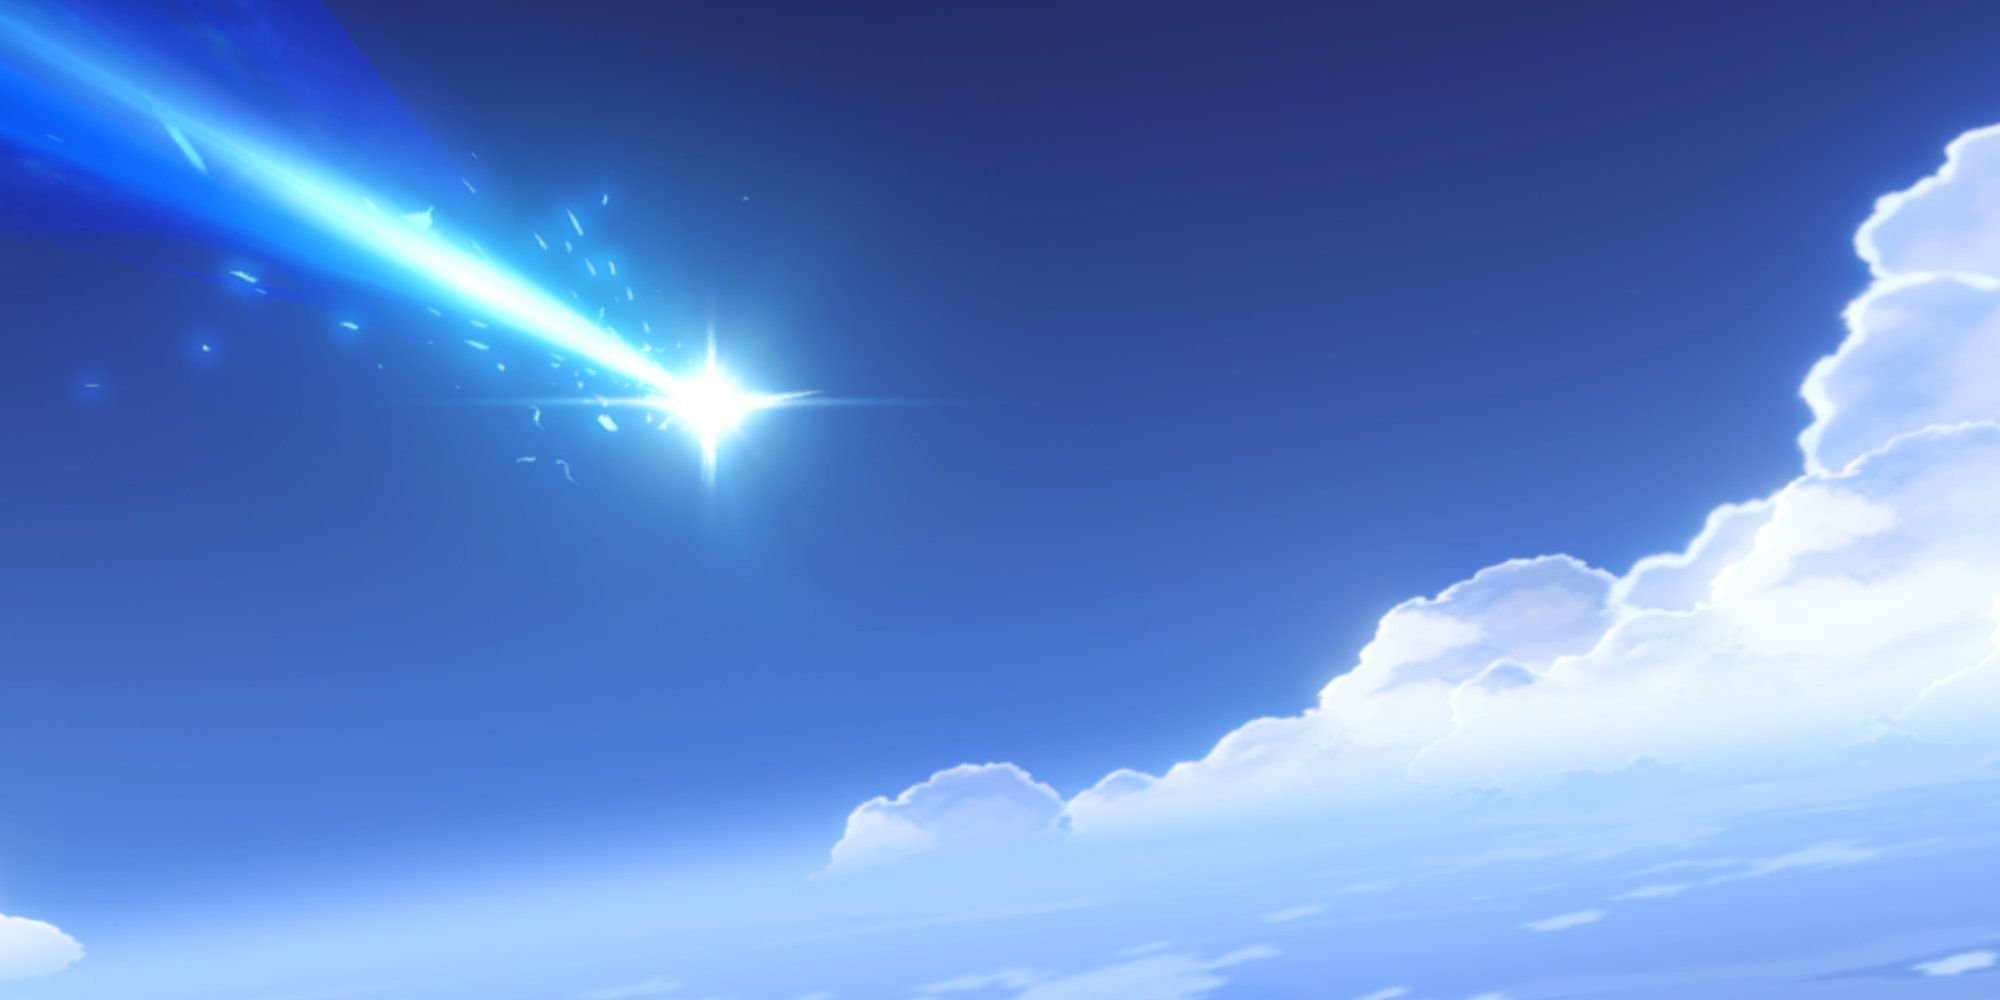 Genshin Impact blue wish in the sky